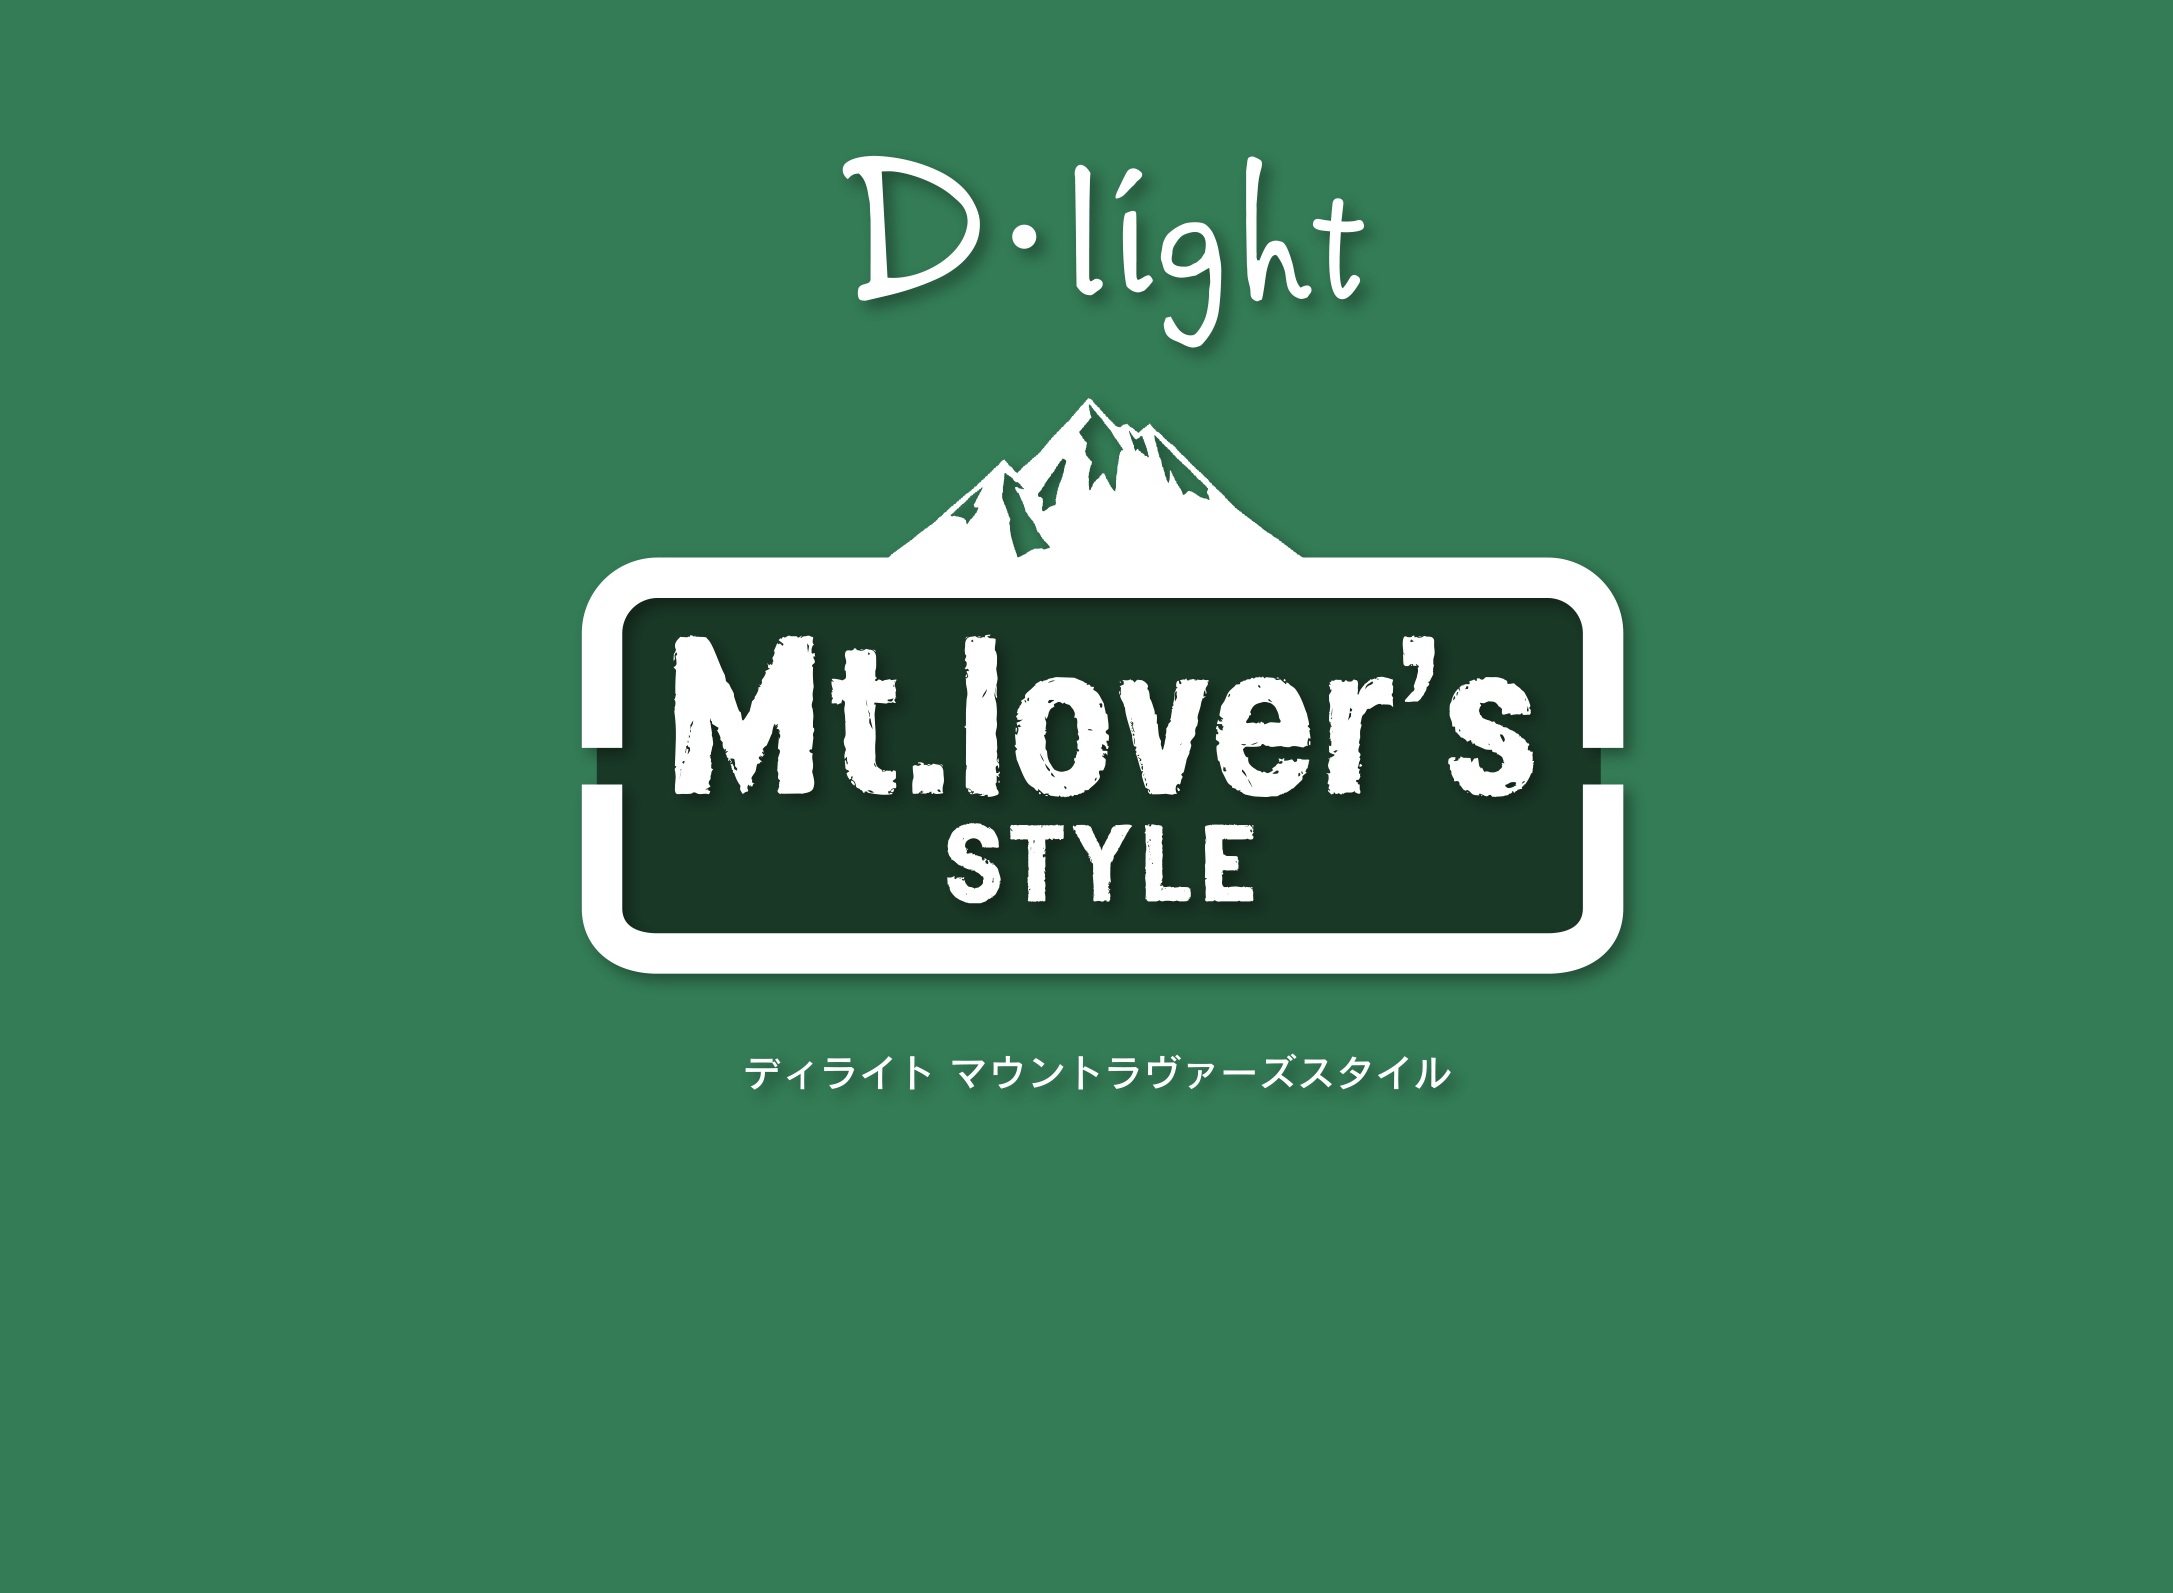 D・light Mt.lover's STYLE